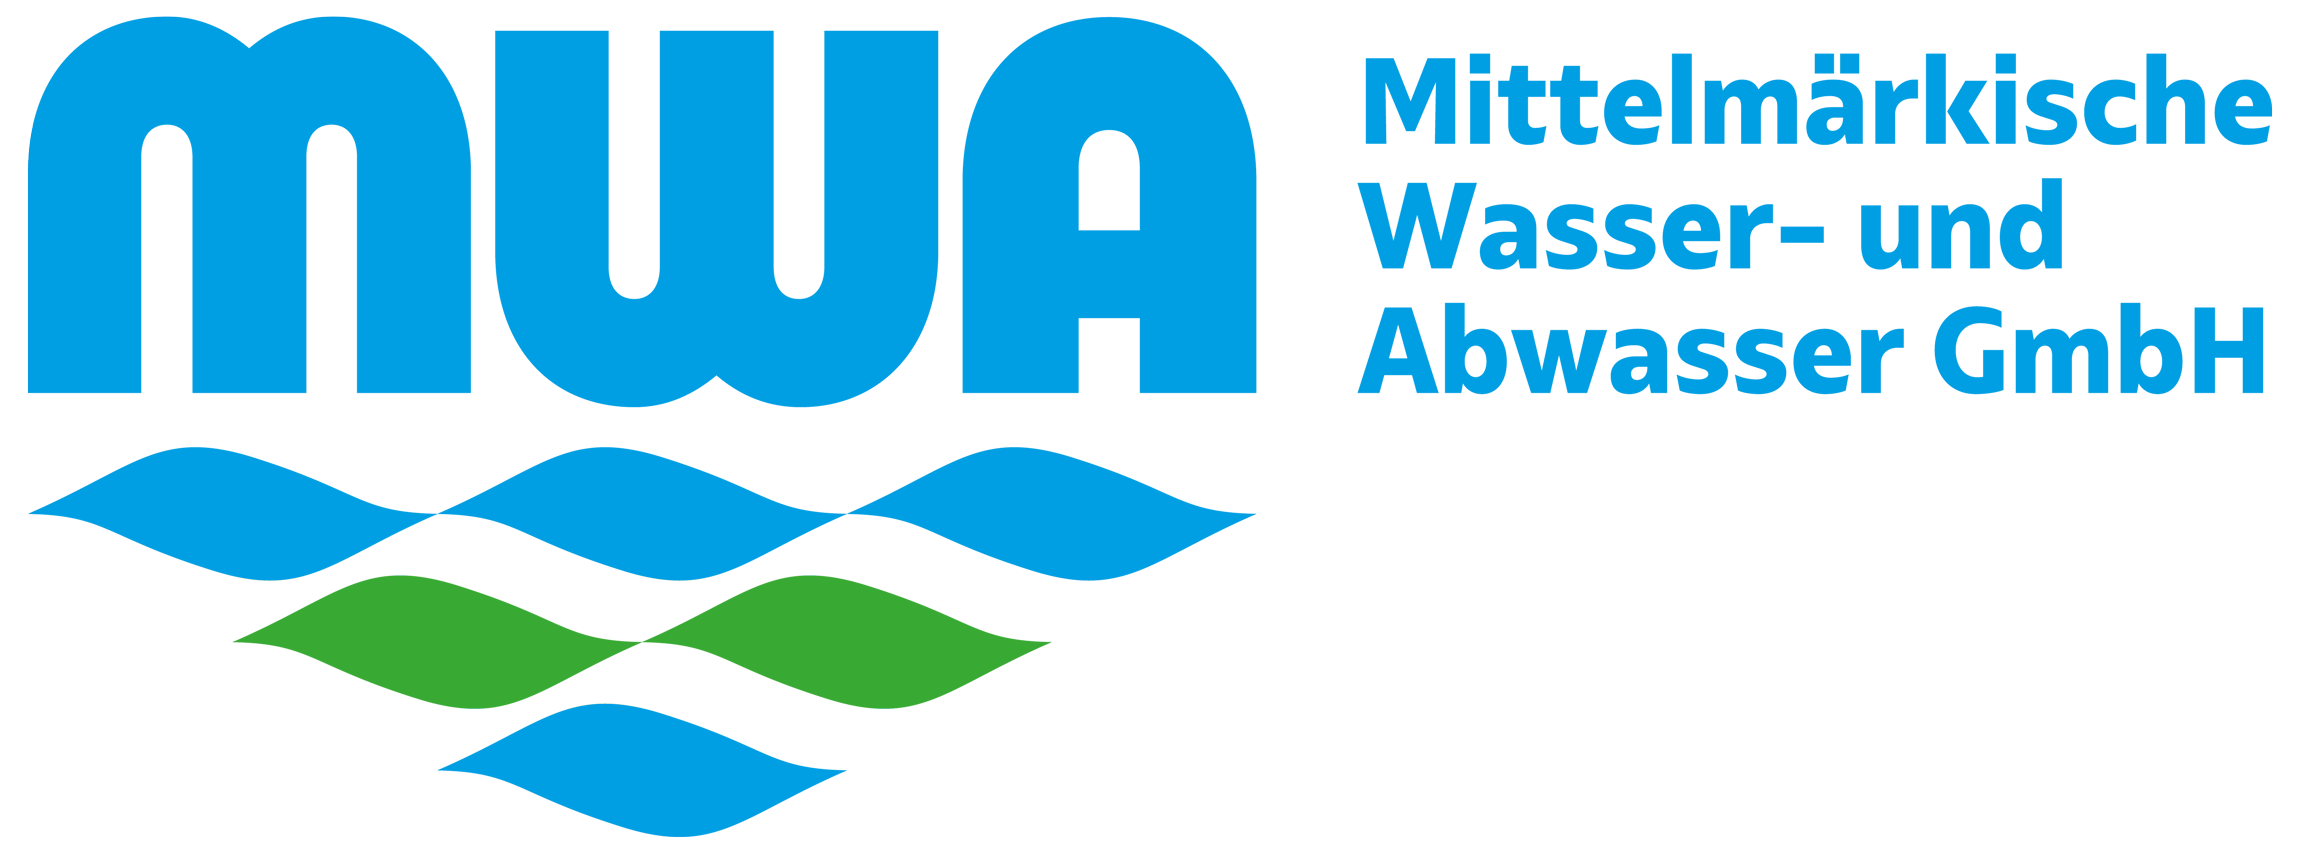 MWA-Logo-Name-2019-RGBstandard-2300pxtransparent